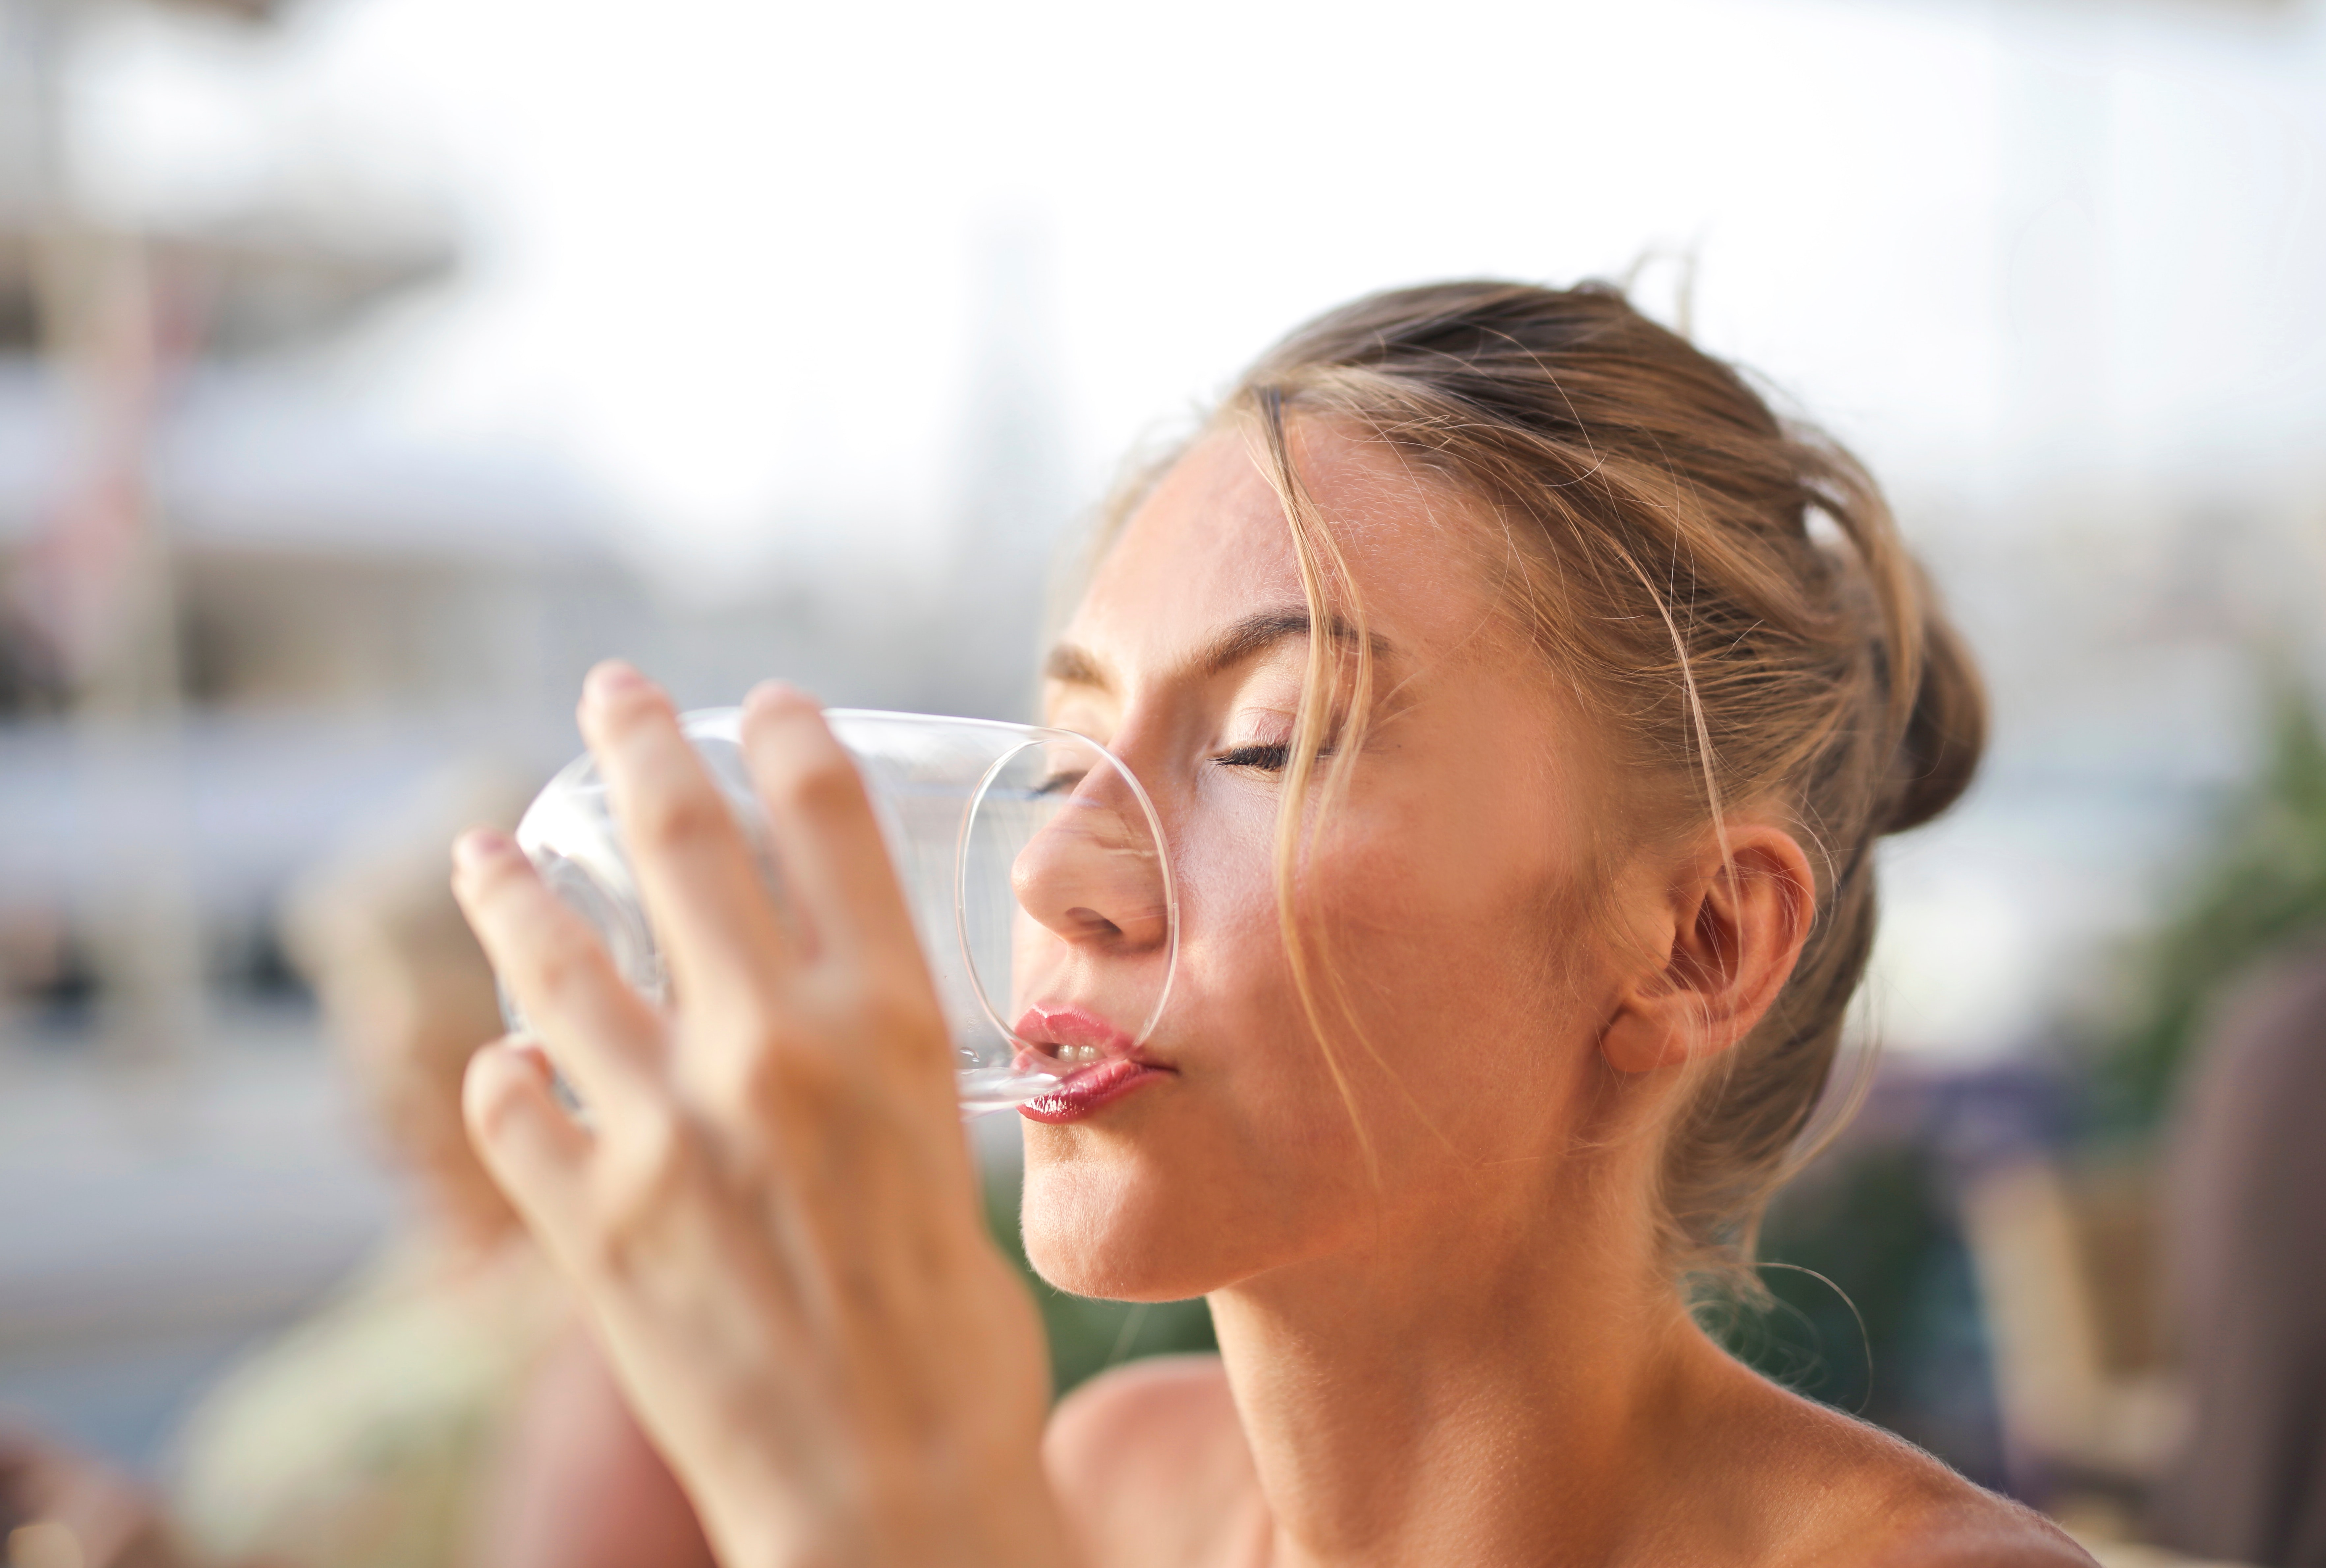 natural cough remedies - Water